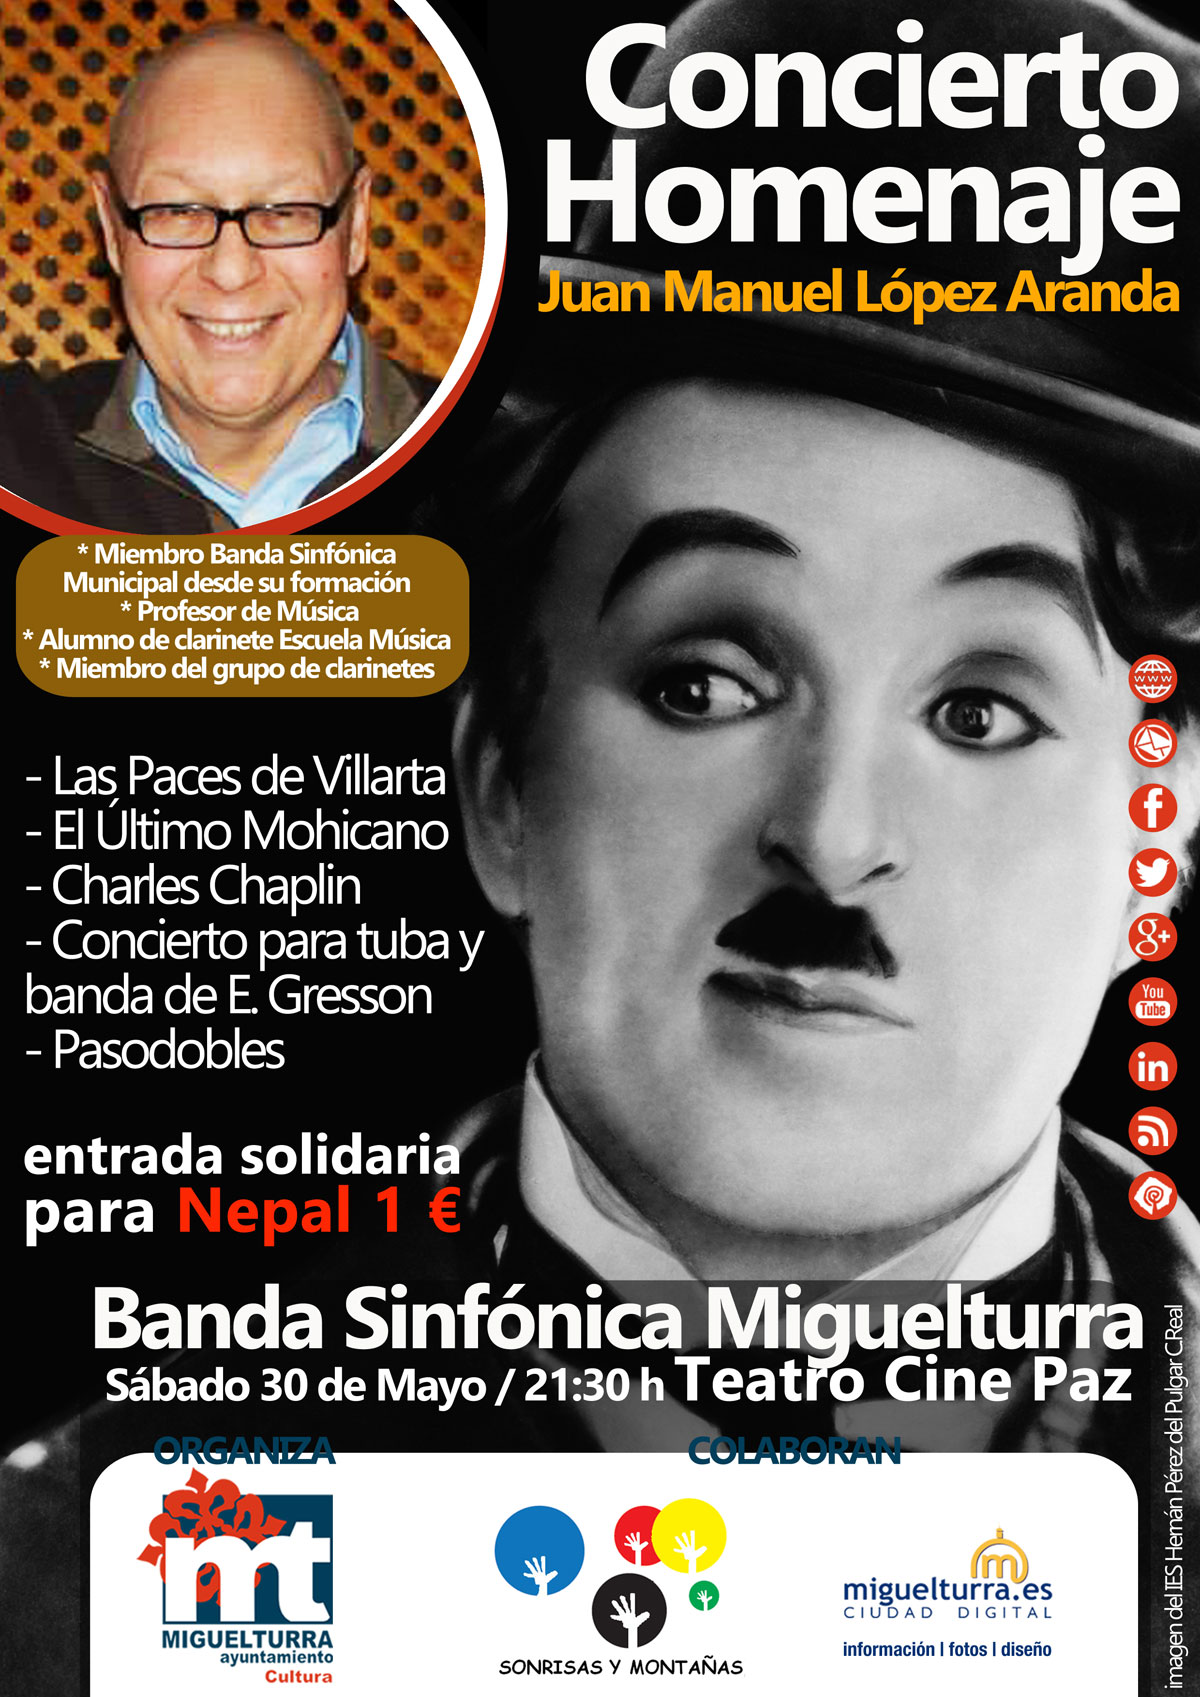 Concierto homenaje de la Banda Sinfónica Municipal de Miguelturra a Juan Manuel López Aranda